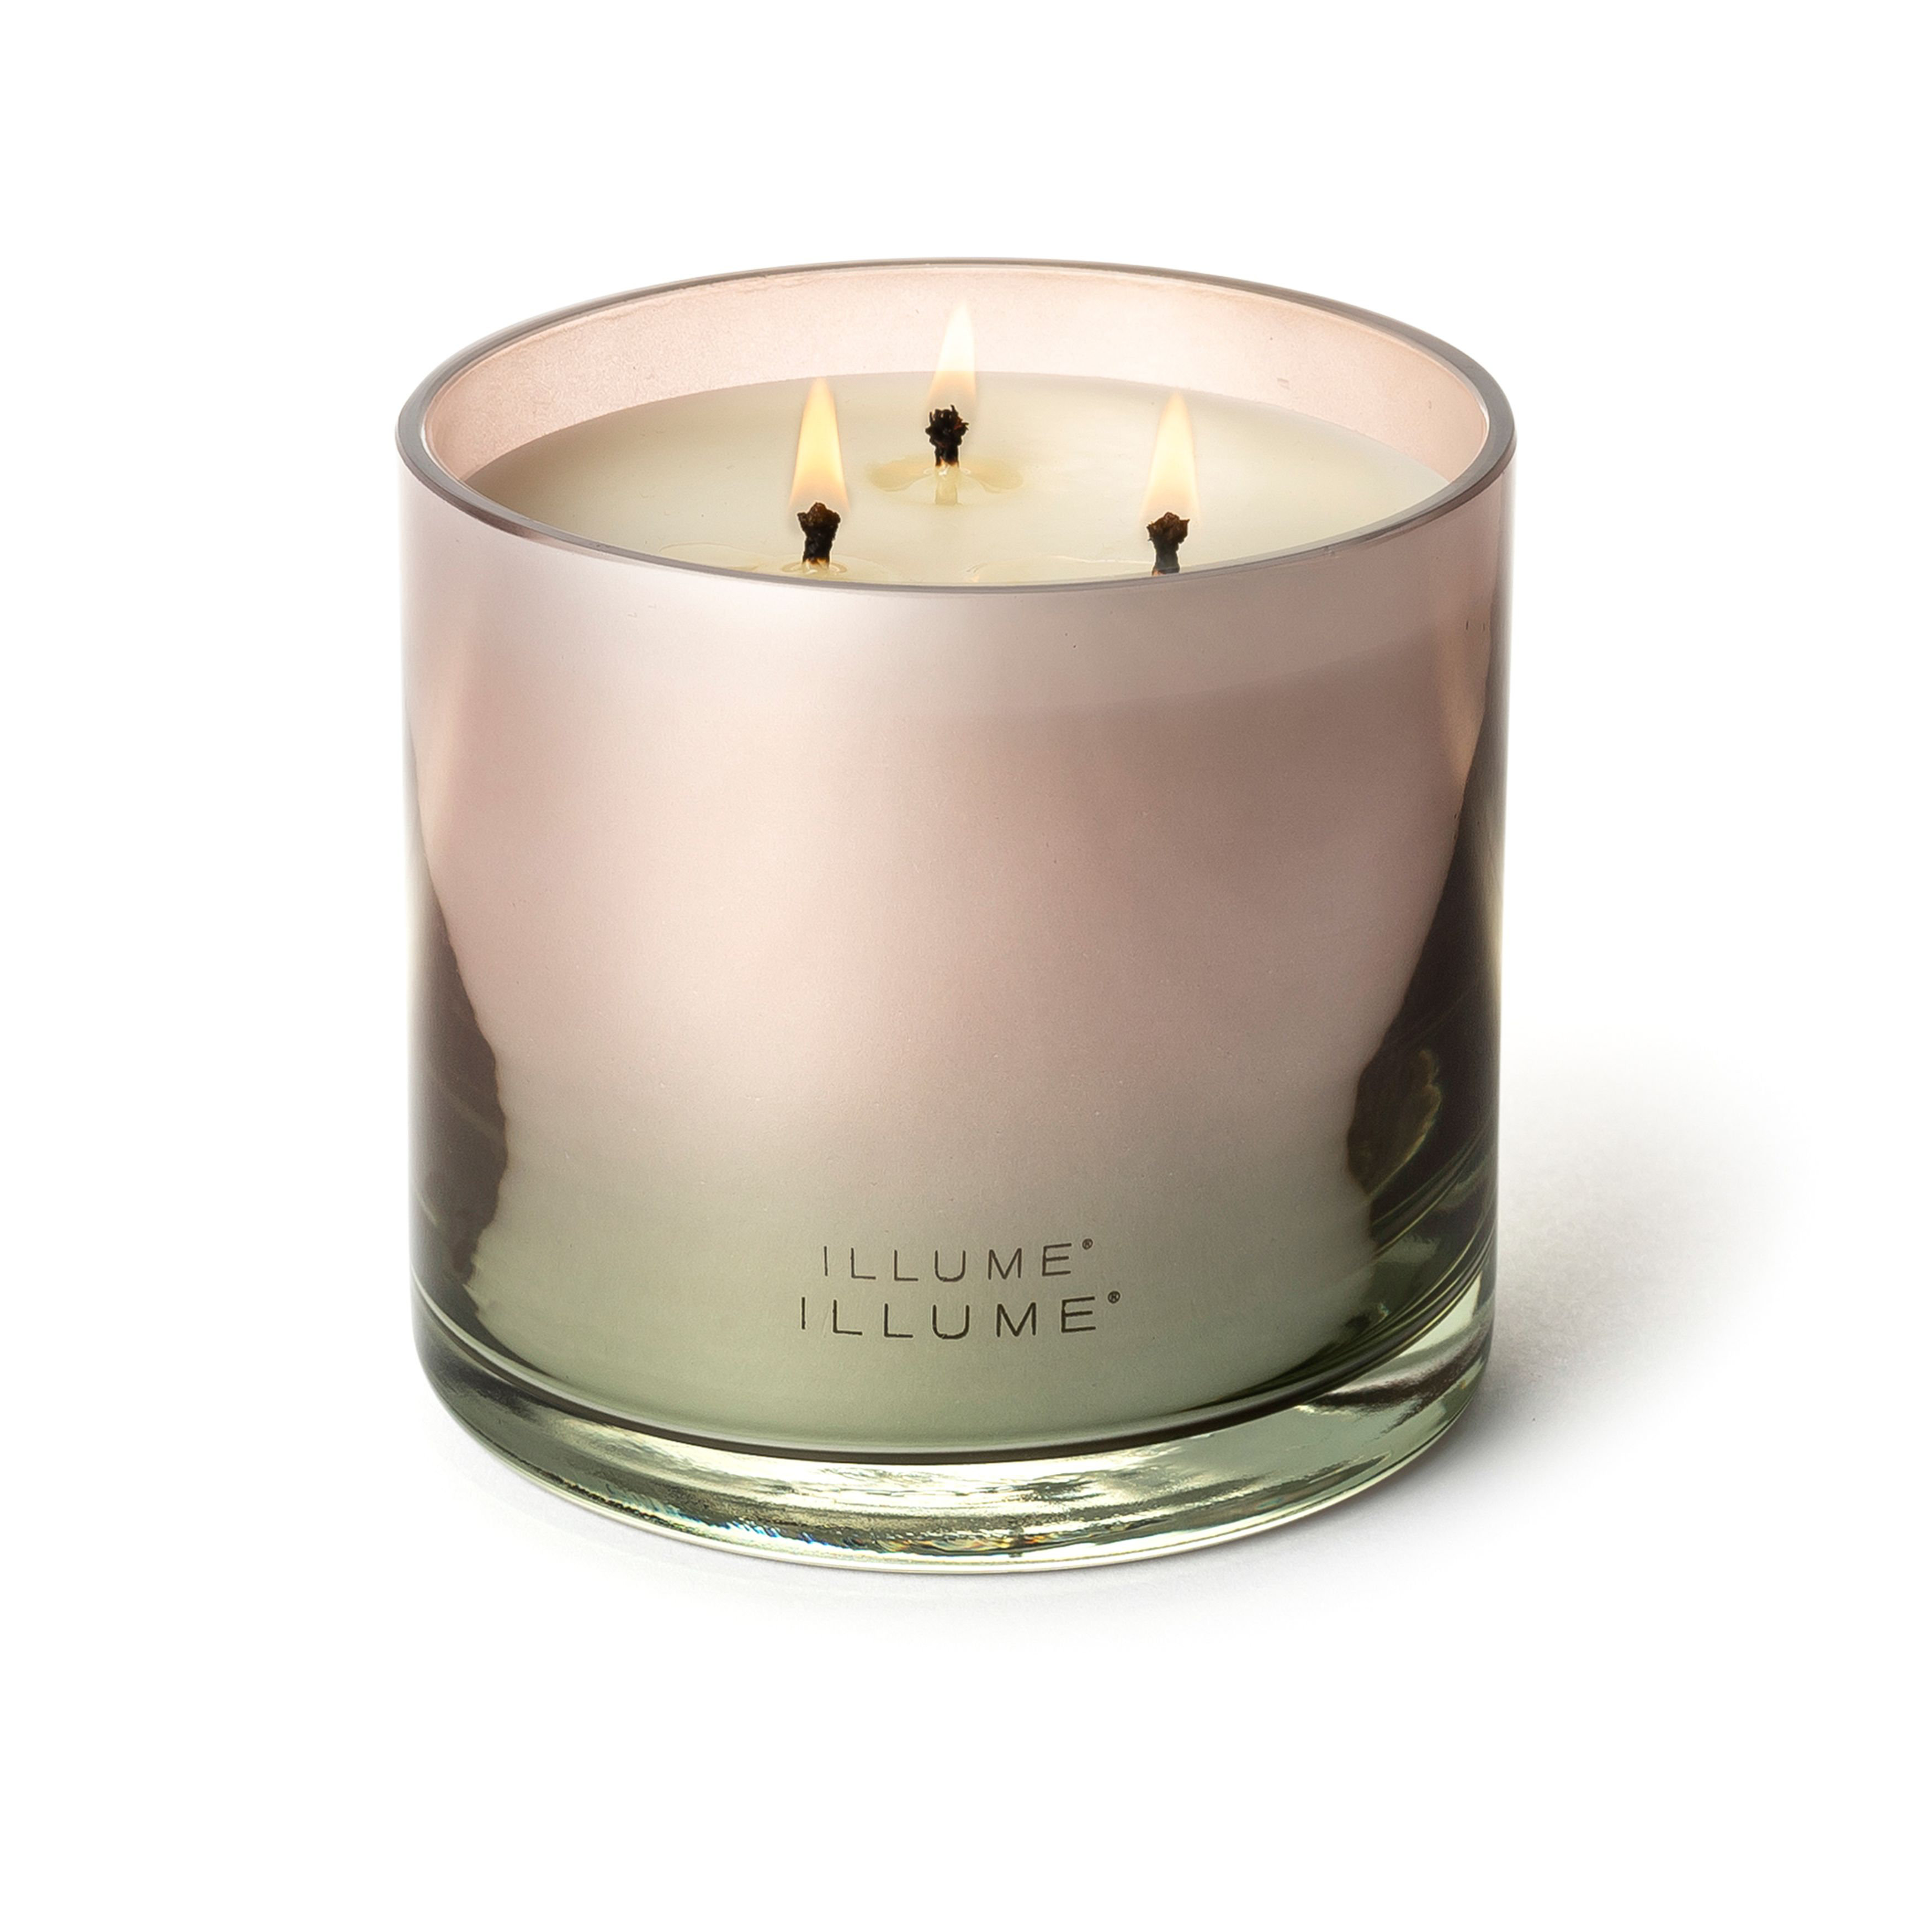 Balsam & Cedar Soy Candle – Lark & Lily Boutique